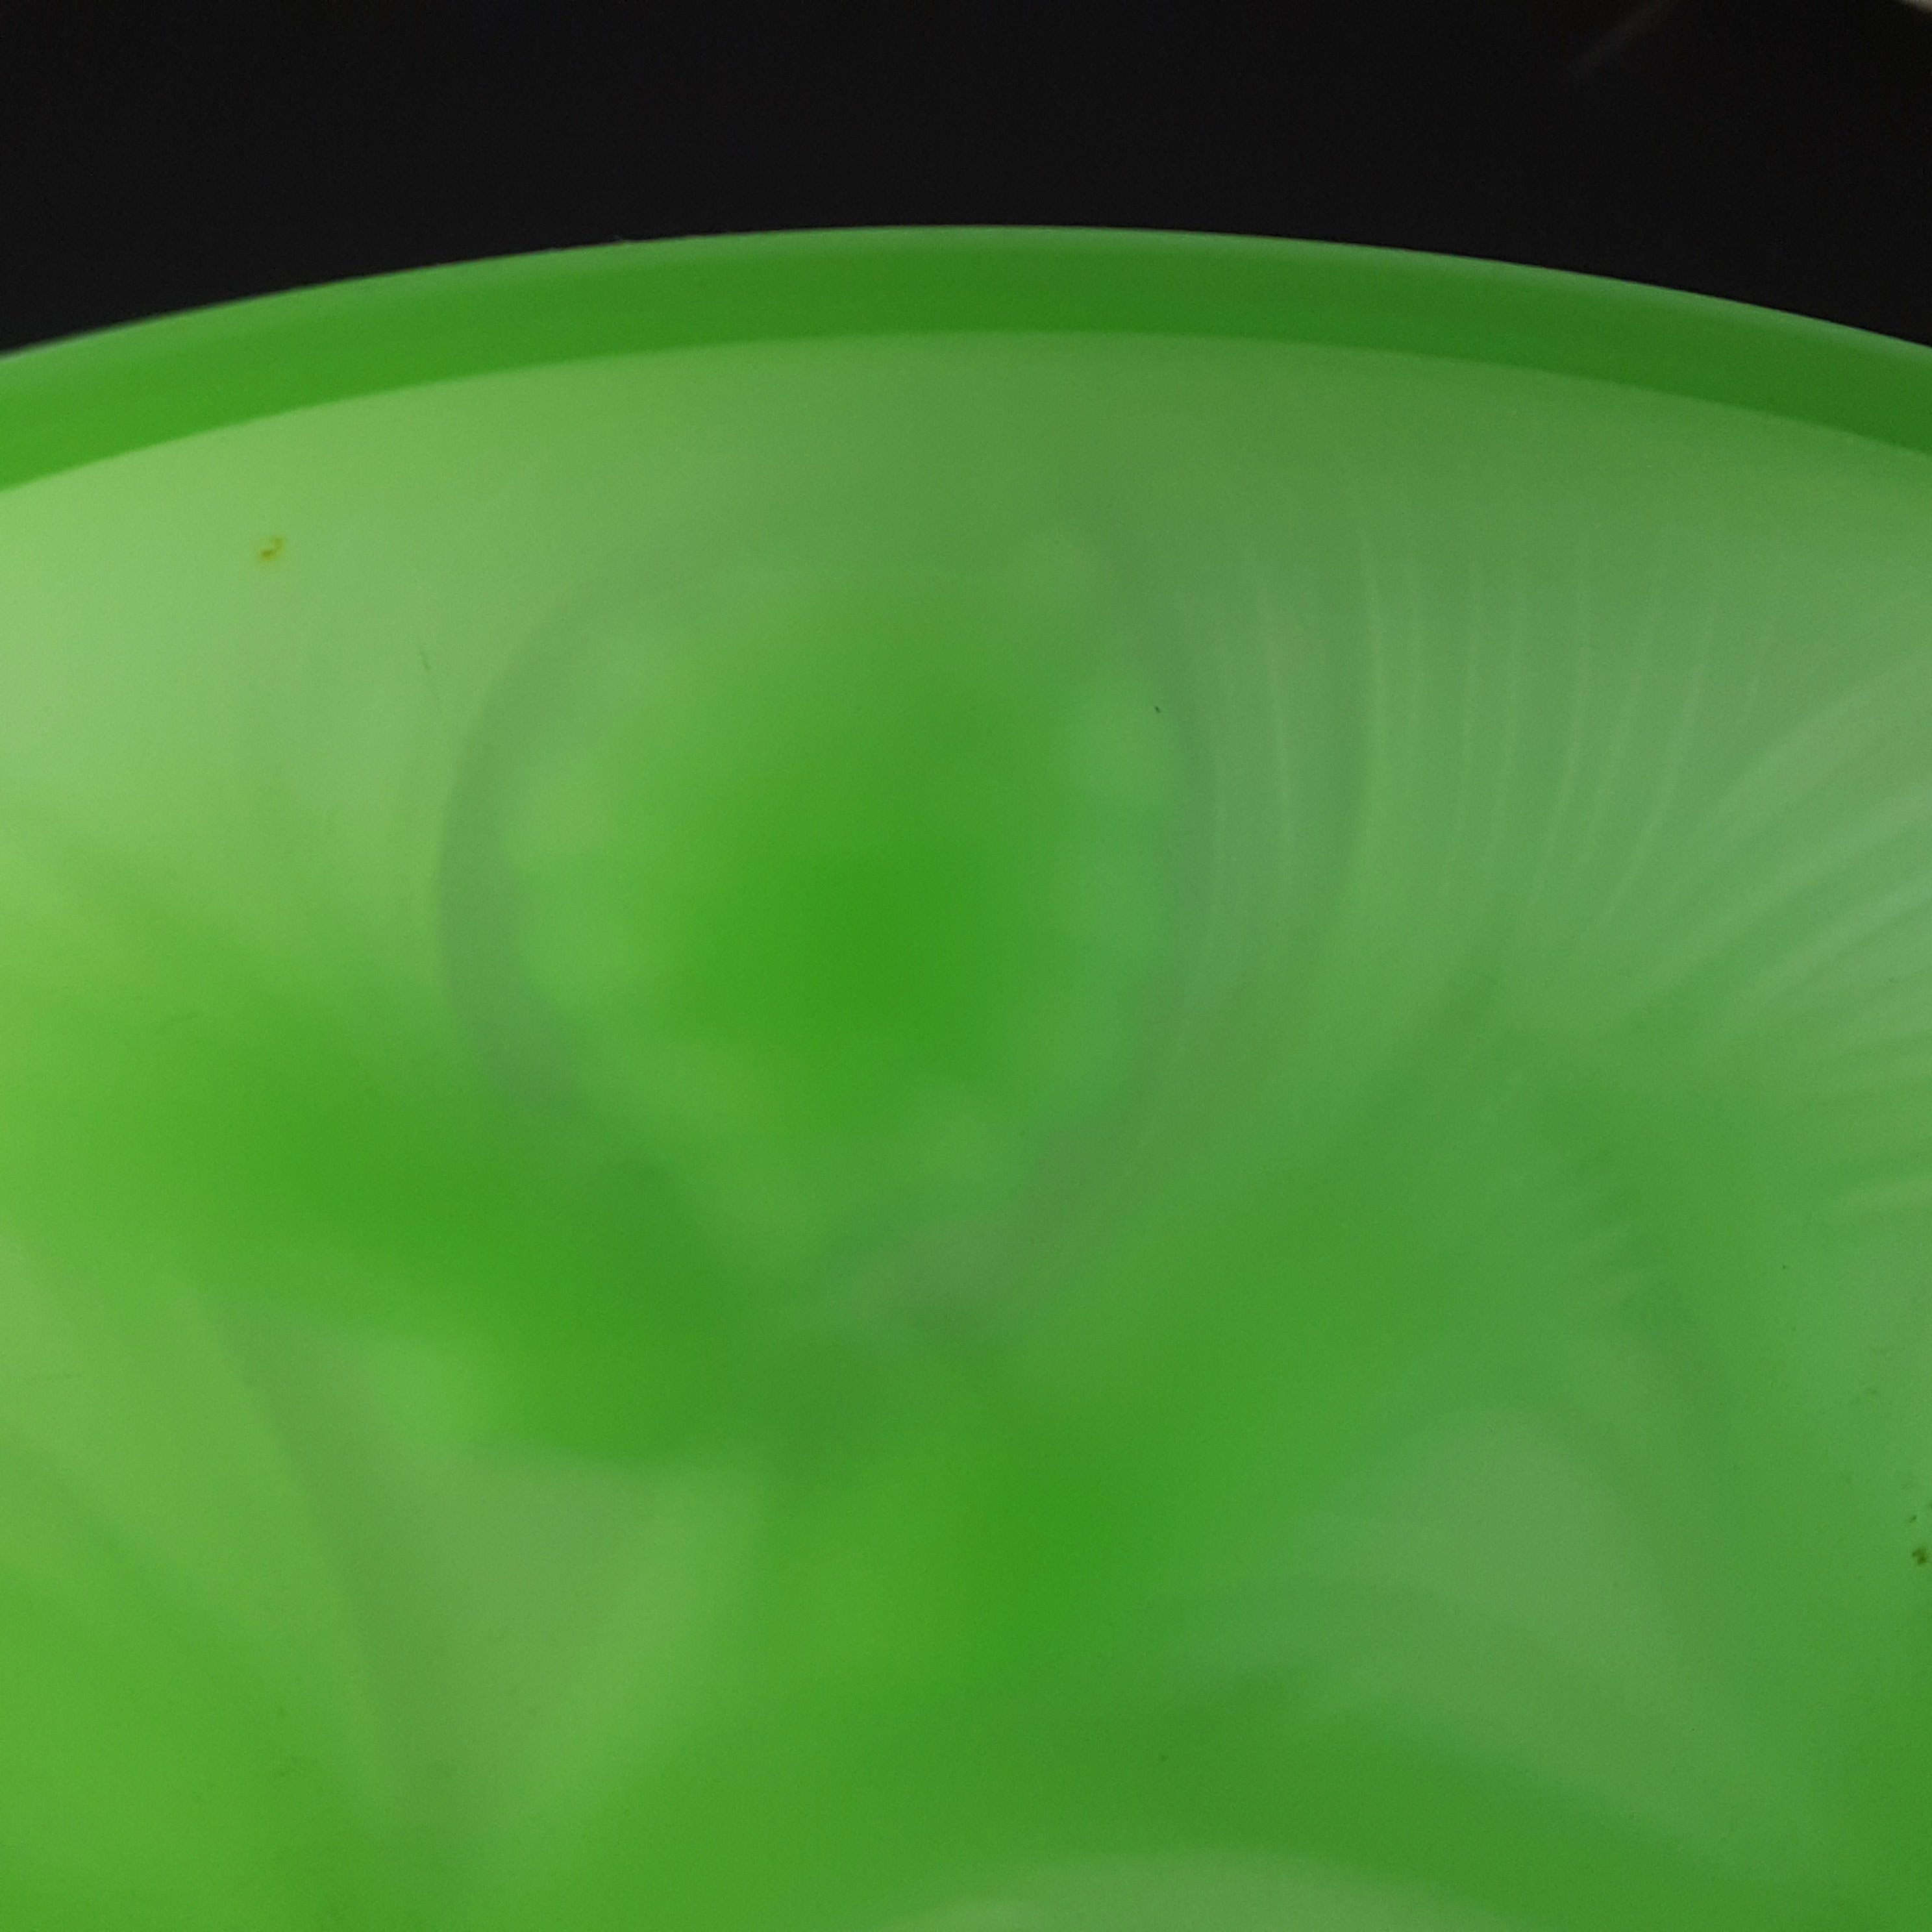 Jobling #5000 Art Deco Uranium Jade Green Glass Fircone Bowl - Click Image to Close